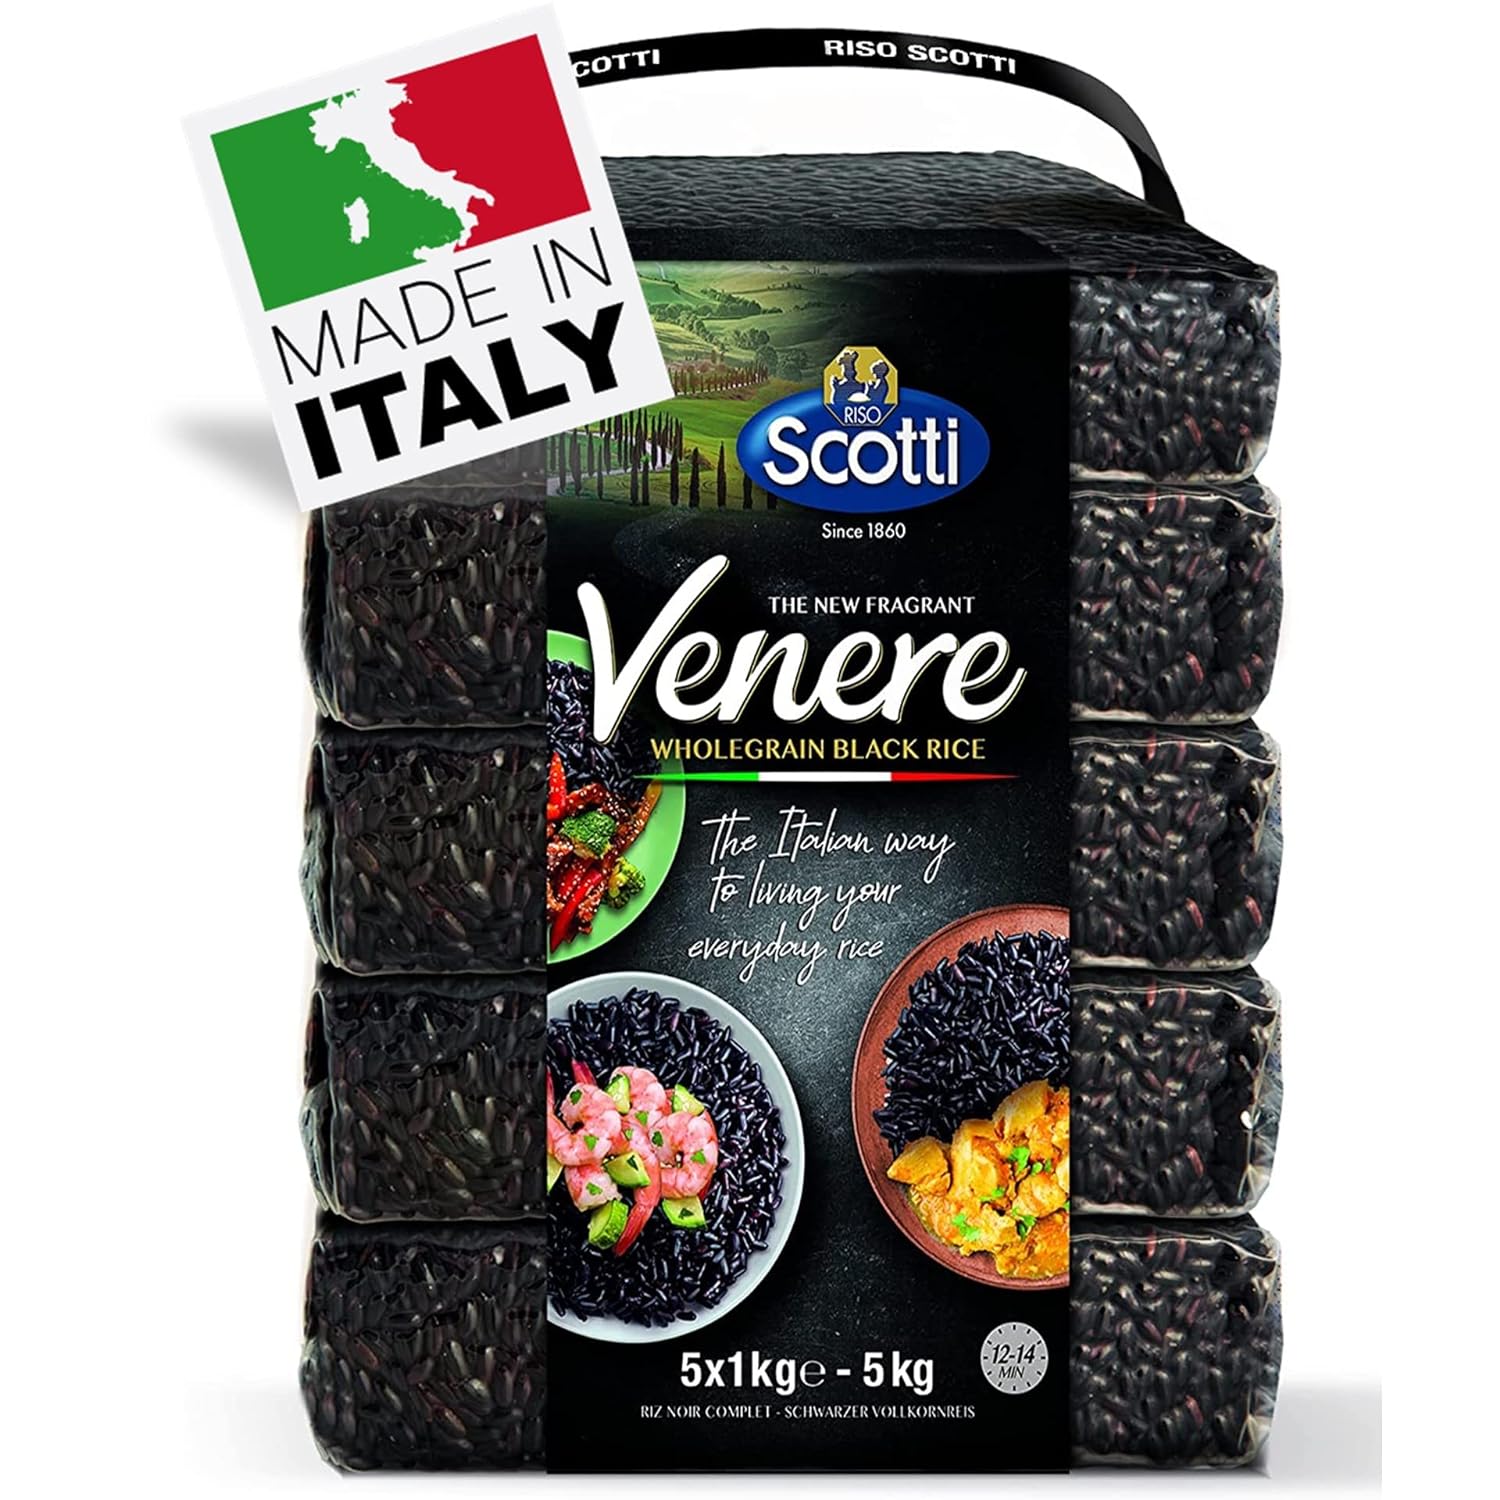 Black Grain Rice, Bulk 11 lbs (5 x 1 kg), Product of Italy, Riso Scotti, Venere, Premium Quality, Wild Ancient Whole Grain Rice, Riso, Product of Italy